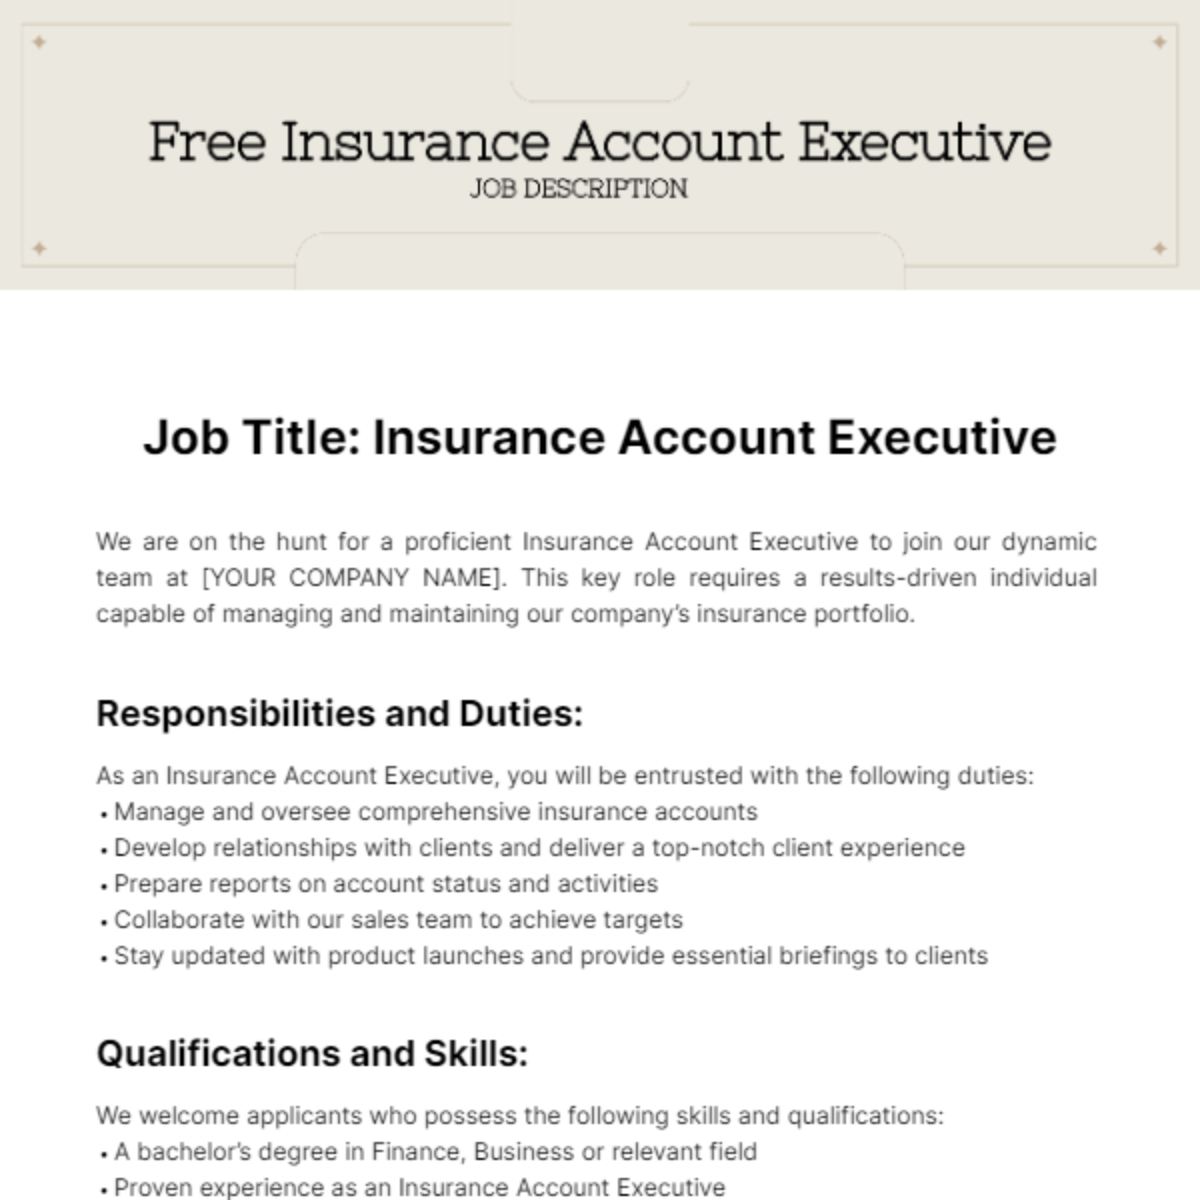 Free Insurance Account Executive Job Description Template